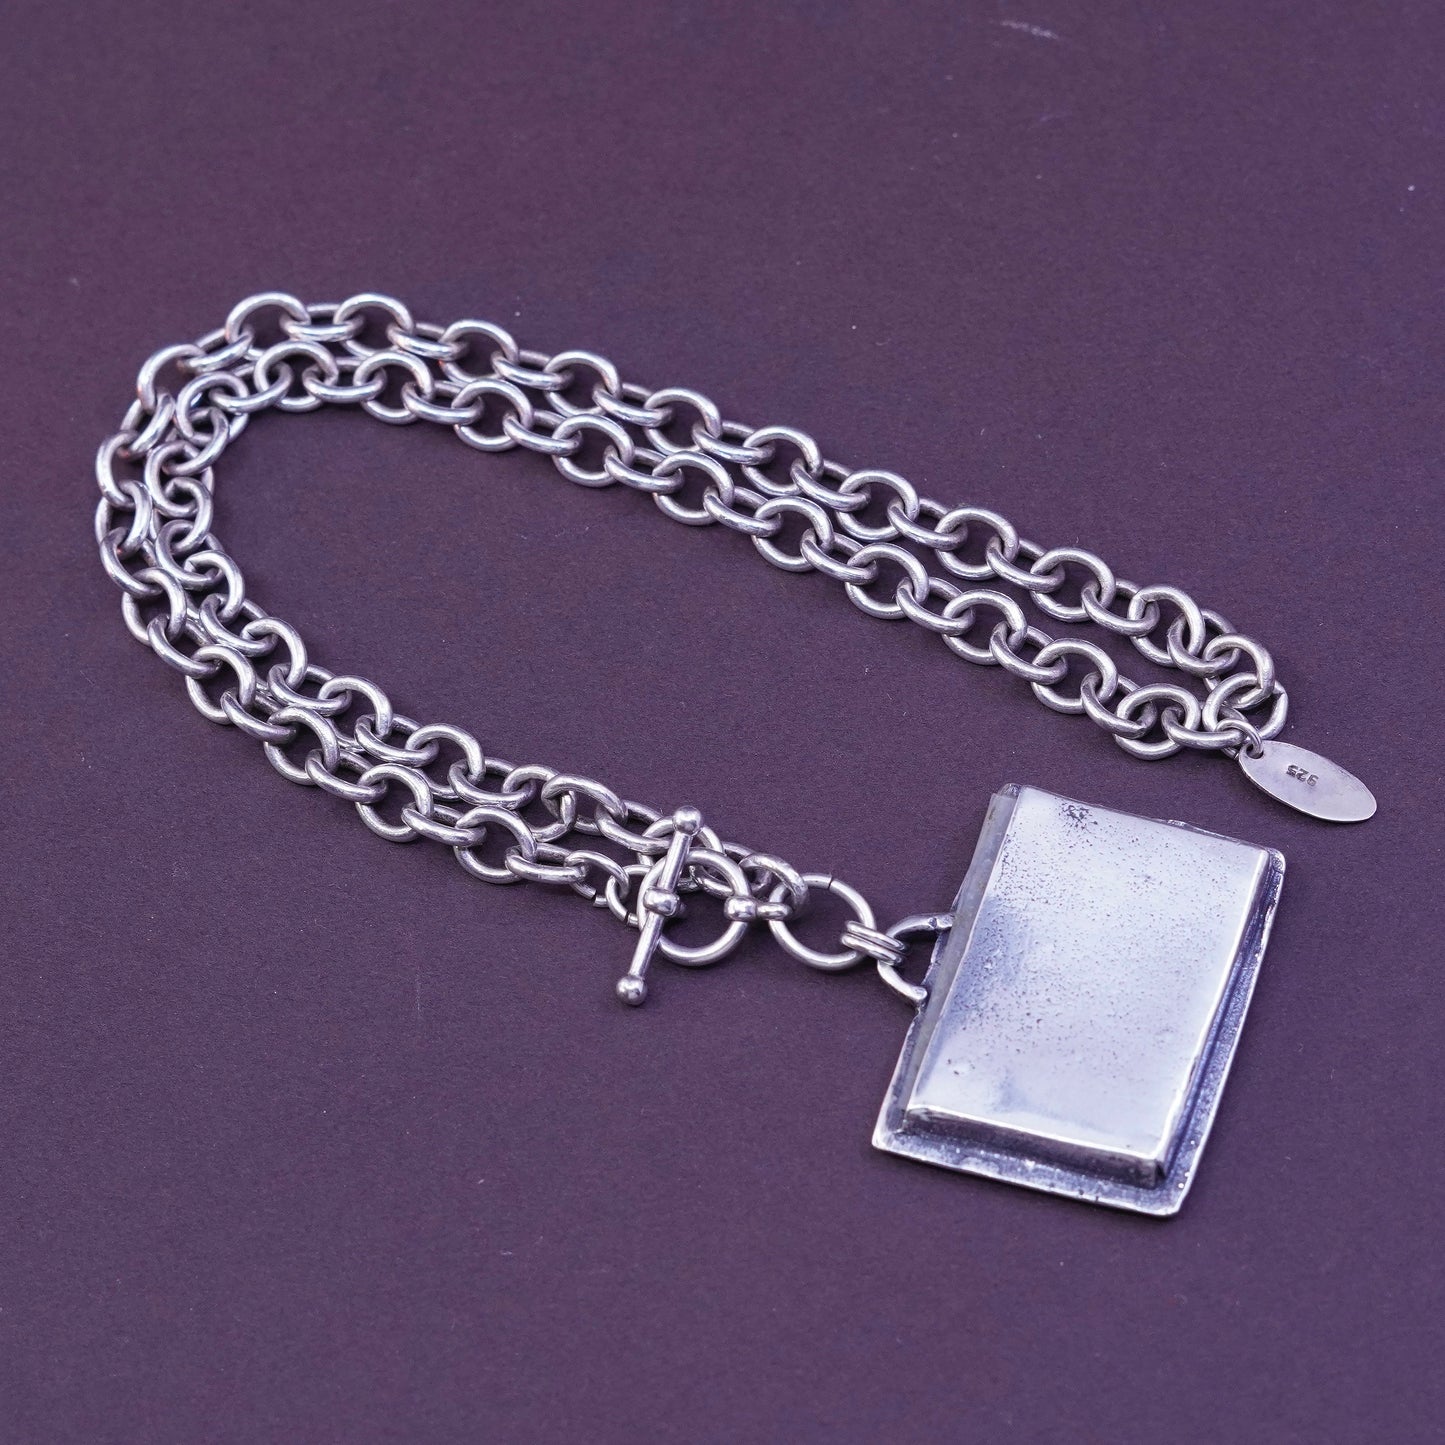 15”, michele baratta sterling silver necklace, 925 bold circle chain w/ locket